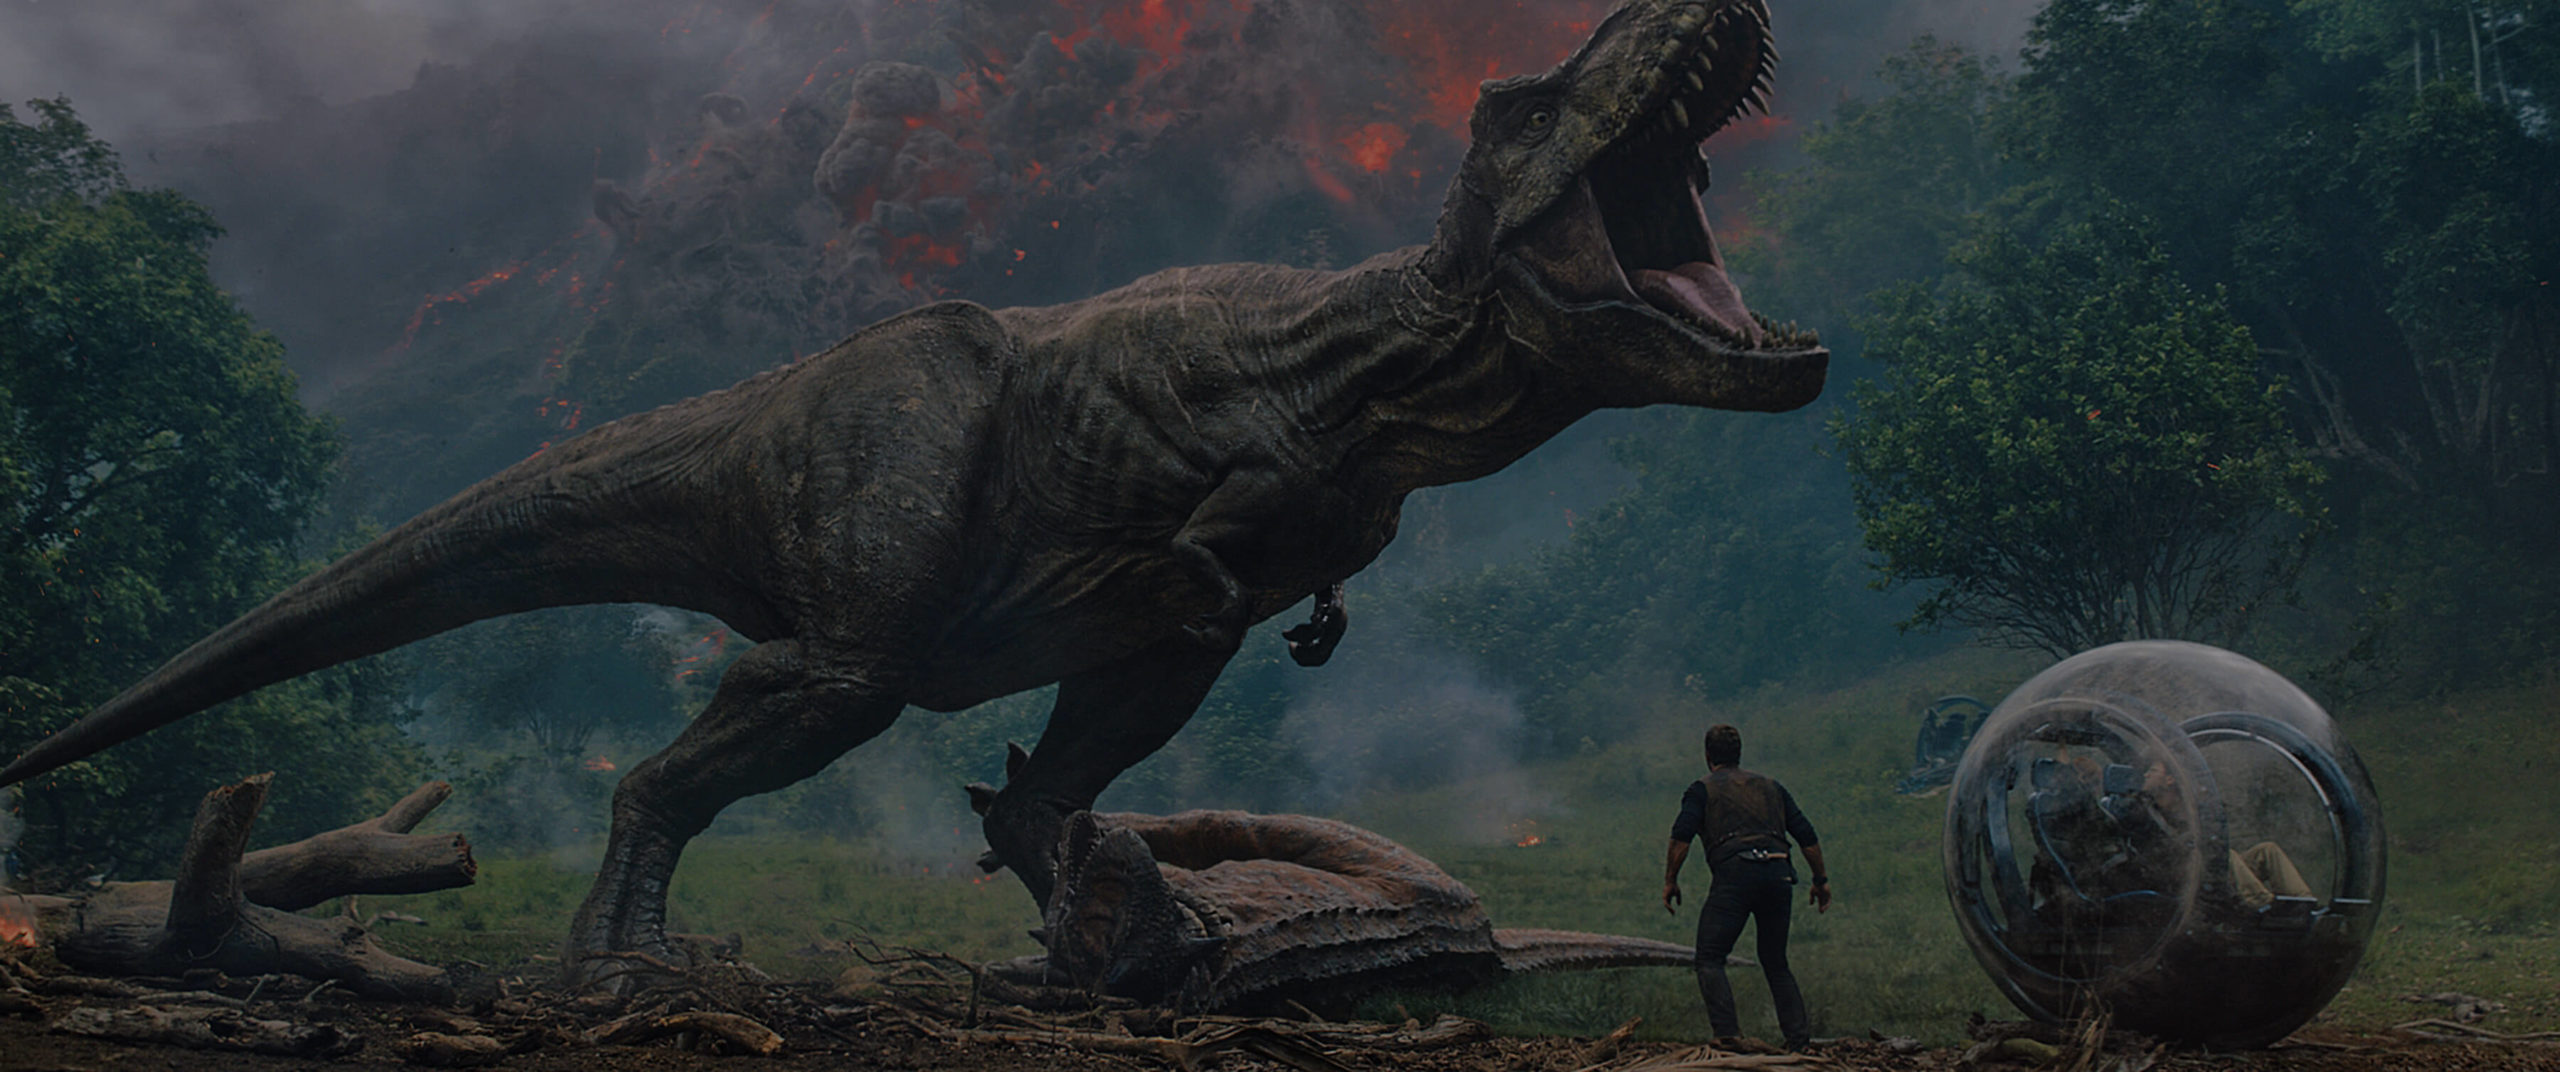 Film Review: ‘Jurassic World: Fallen Kingdom’